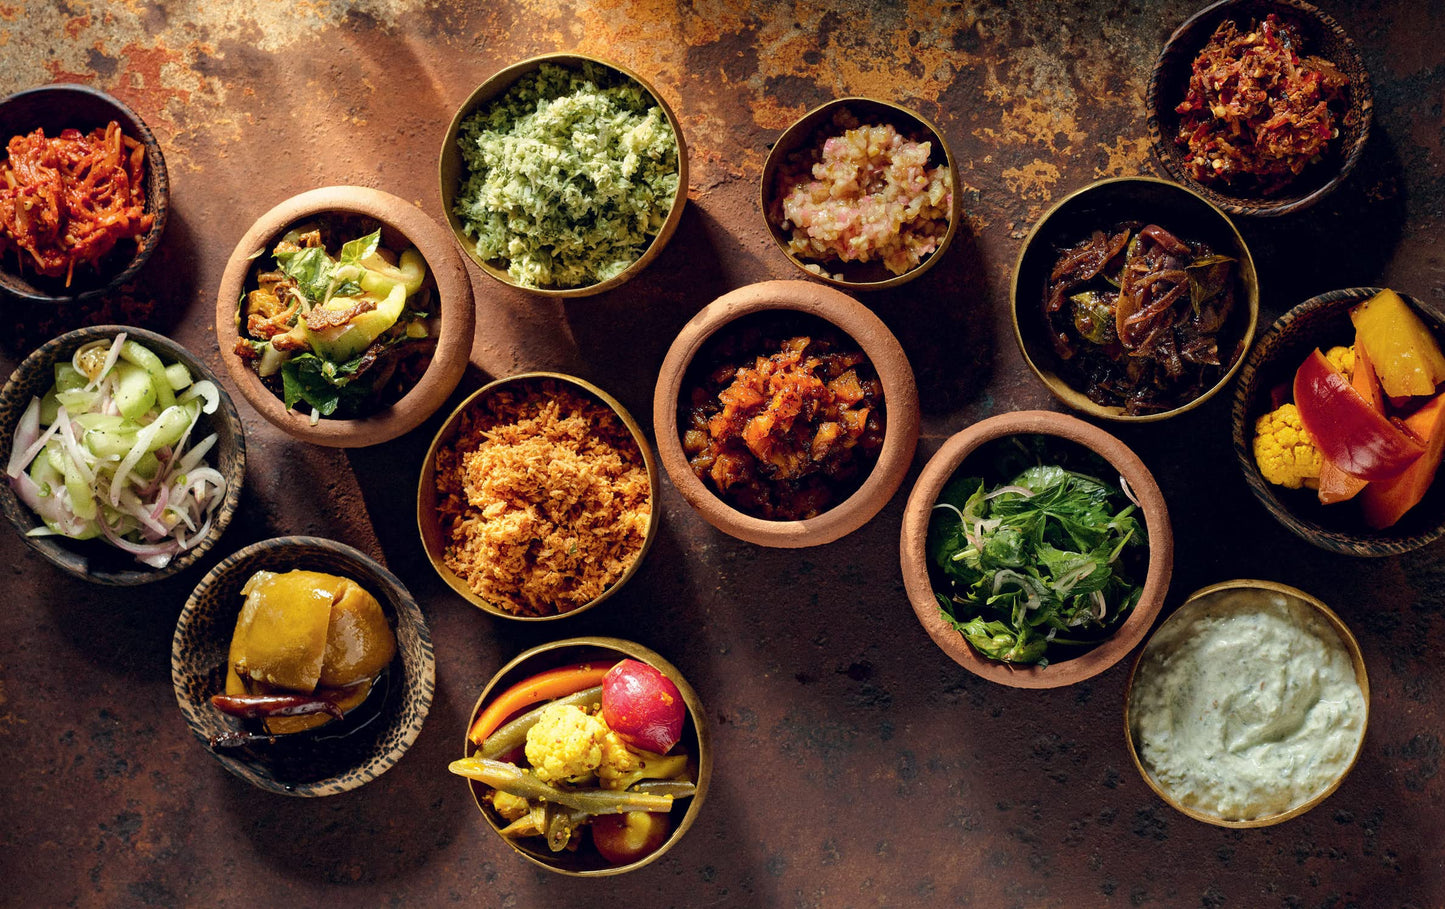 Lanka Food: Serendipity & Spice by O Tama Carey